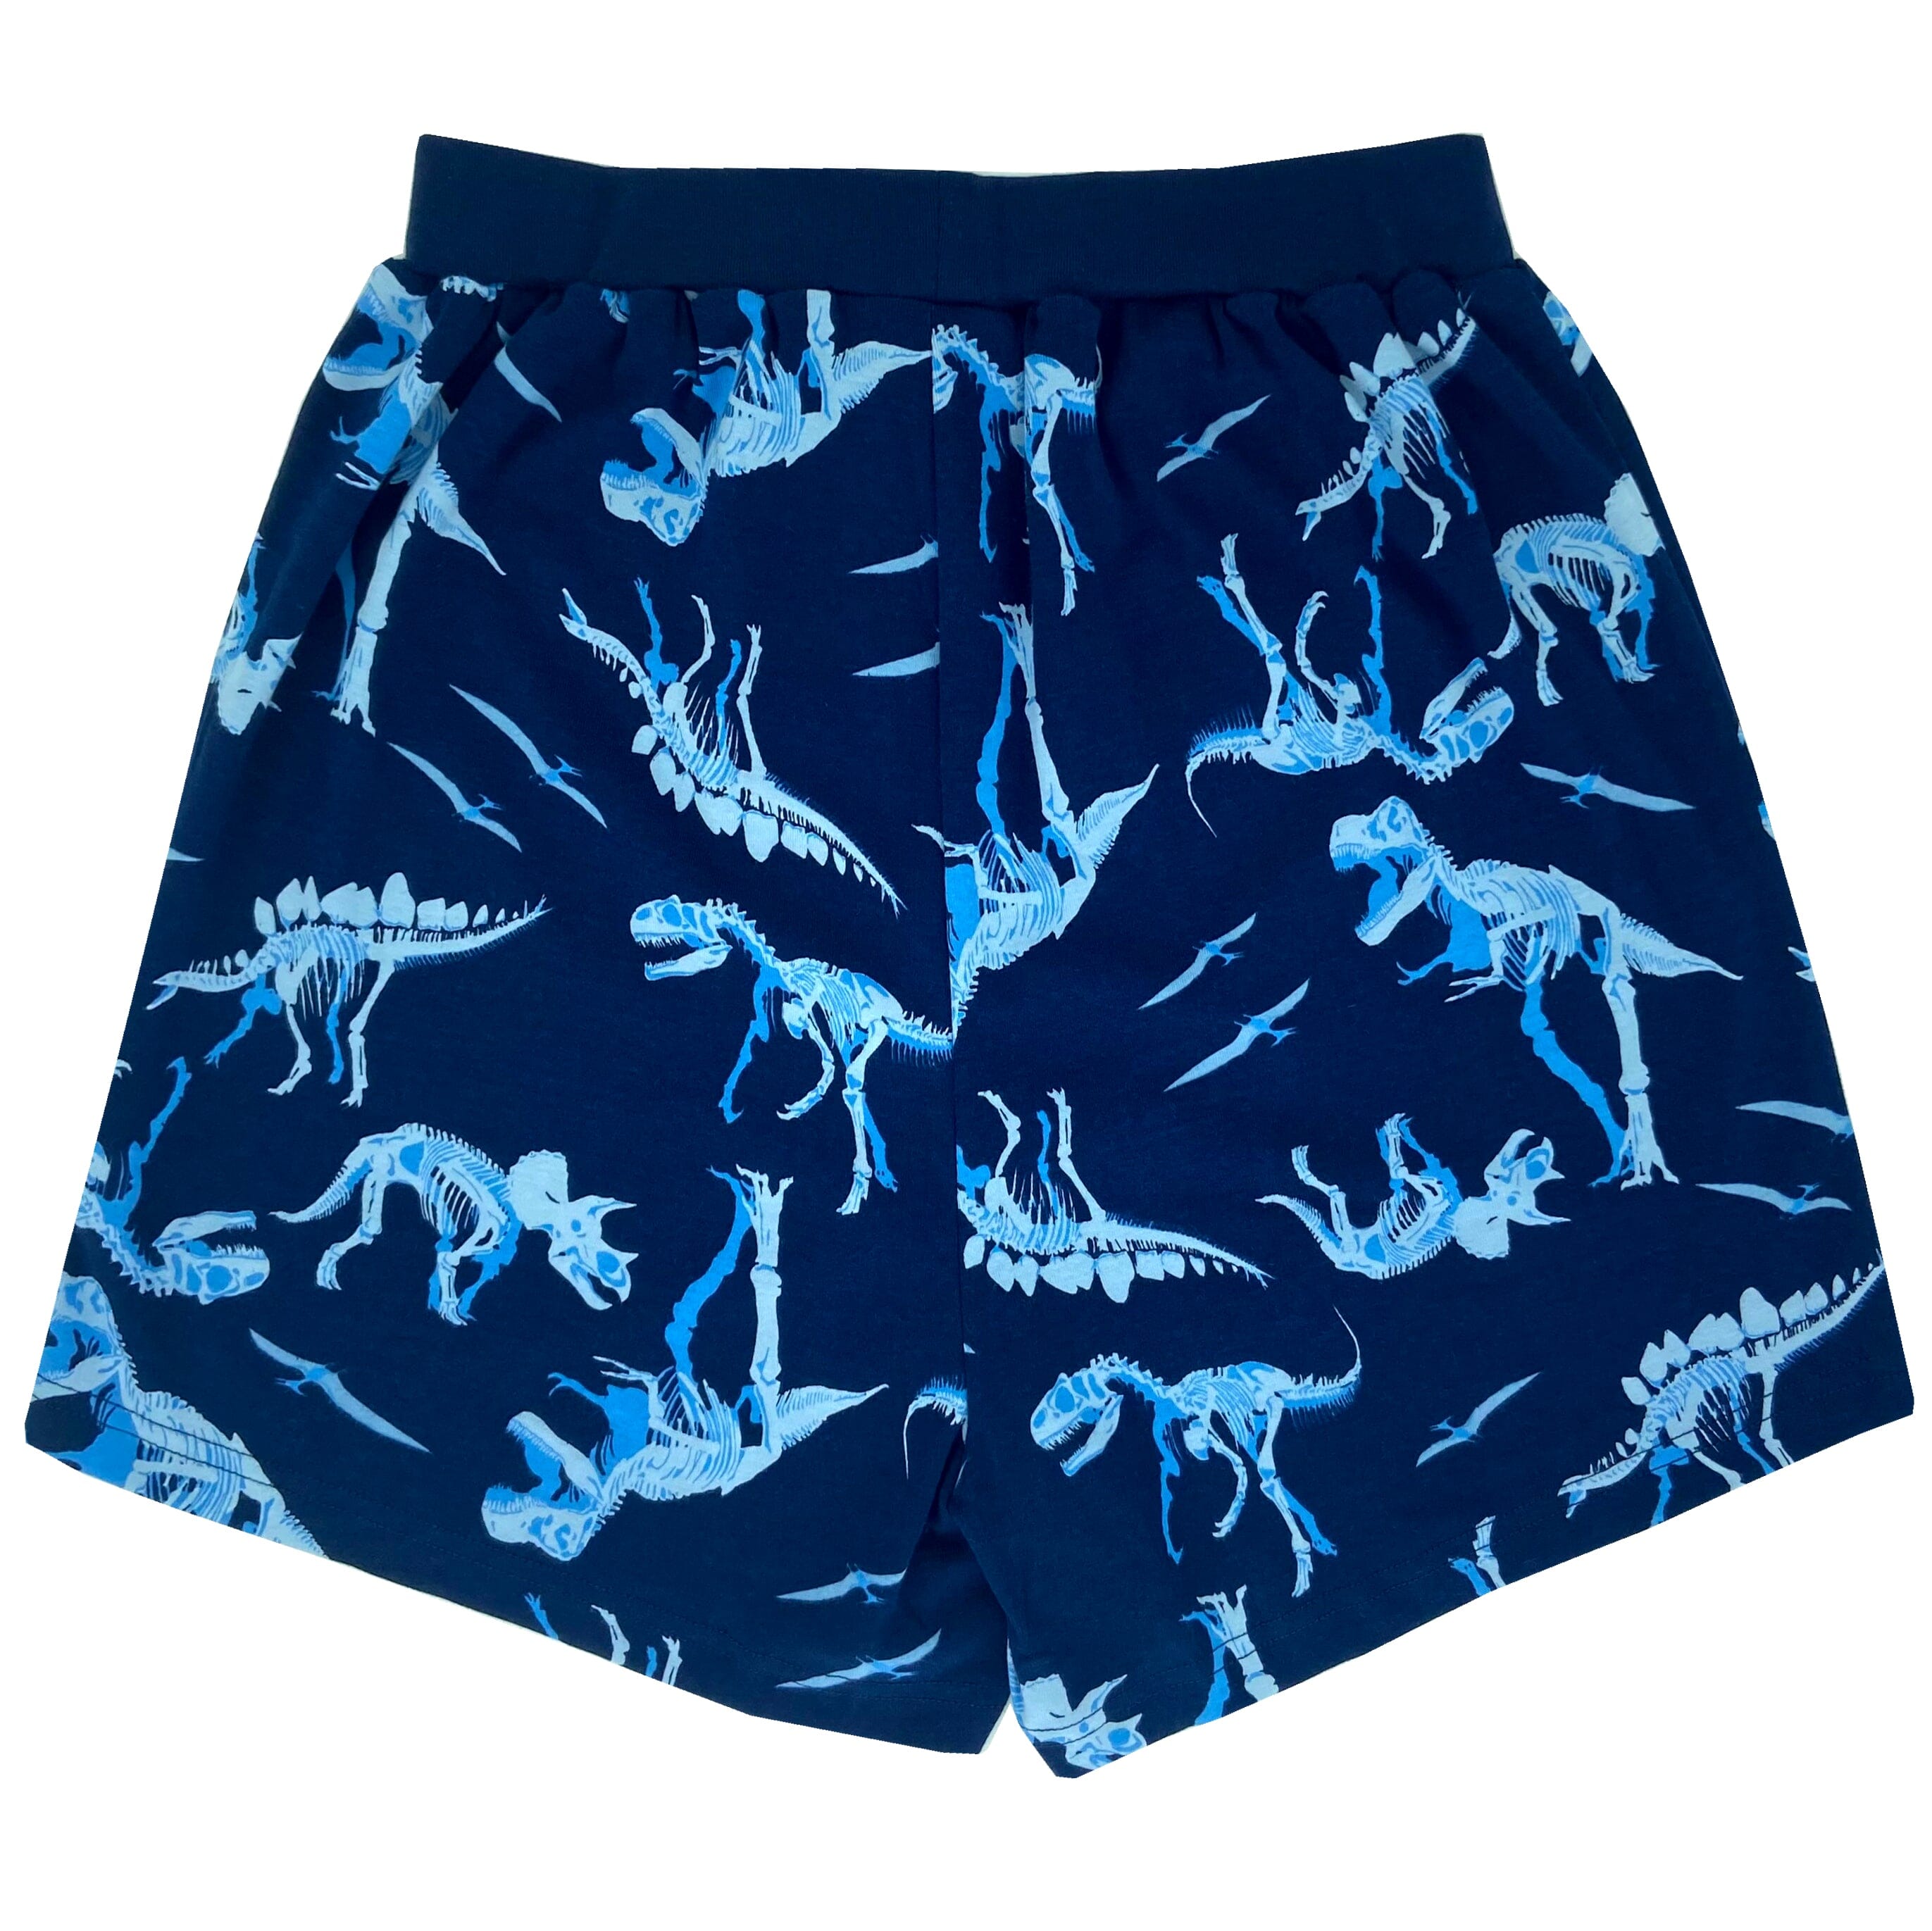 Men's Dinosaur Fossil Bones Patterned Cotton Knit Pyjama Sleep Shorts